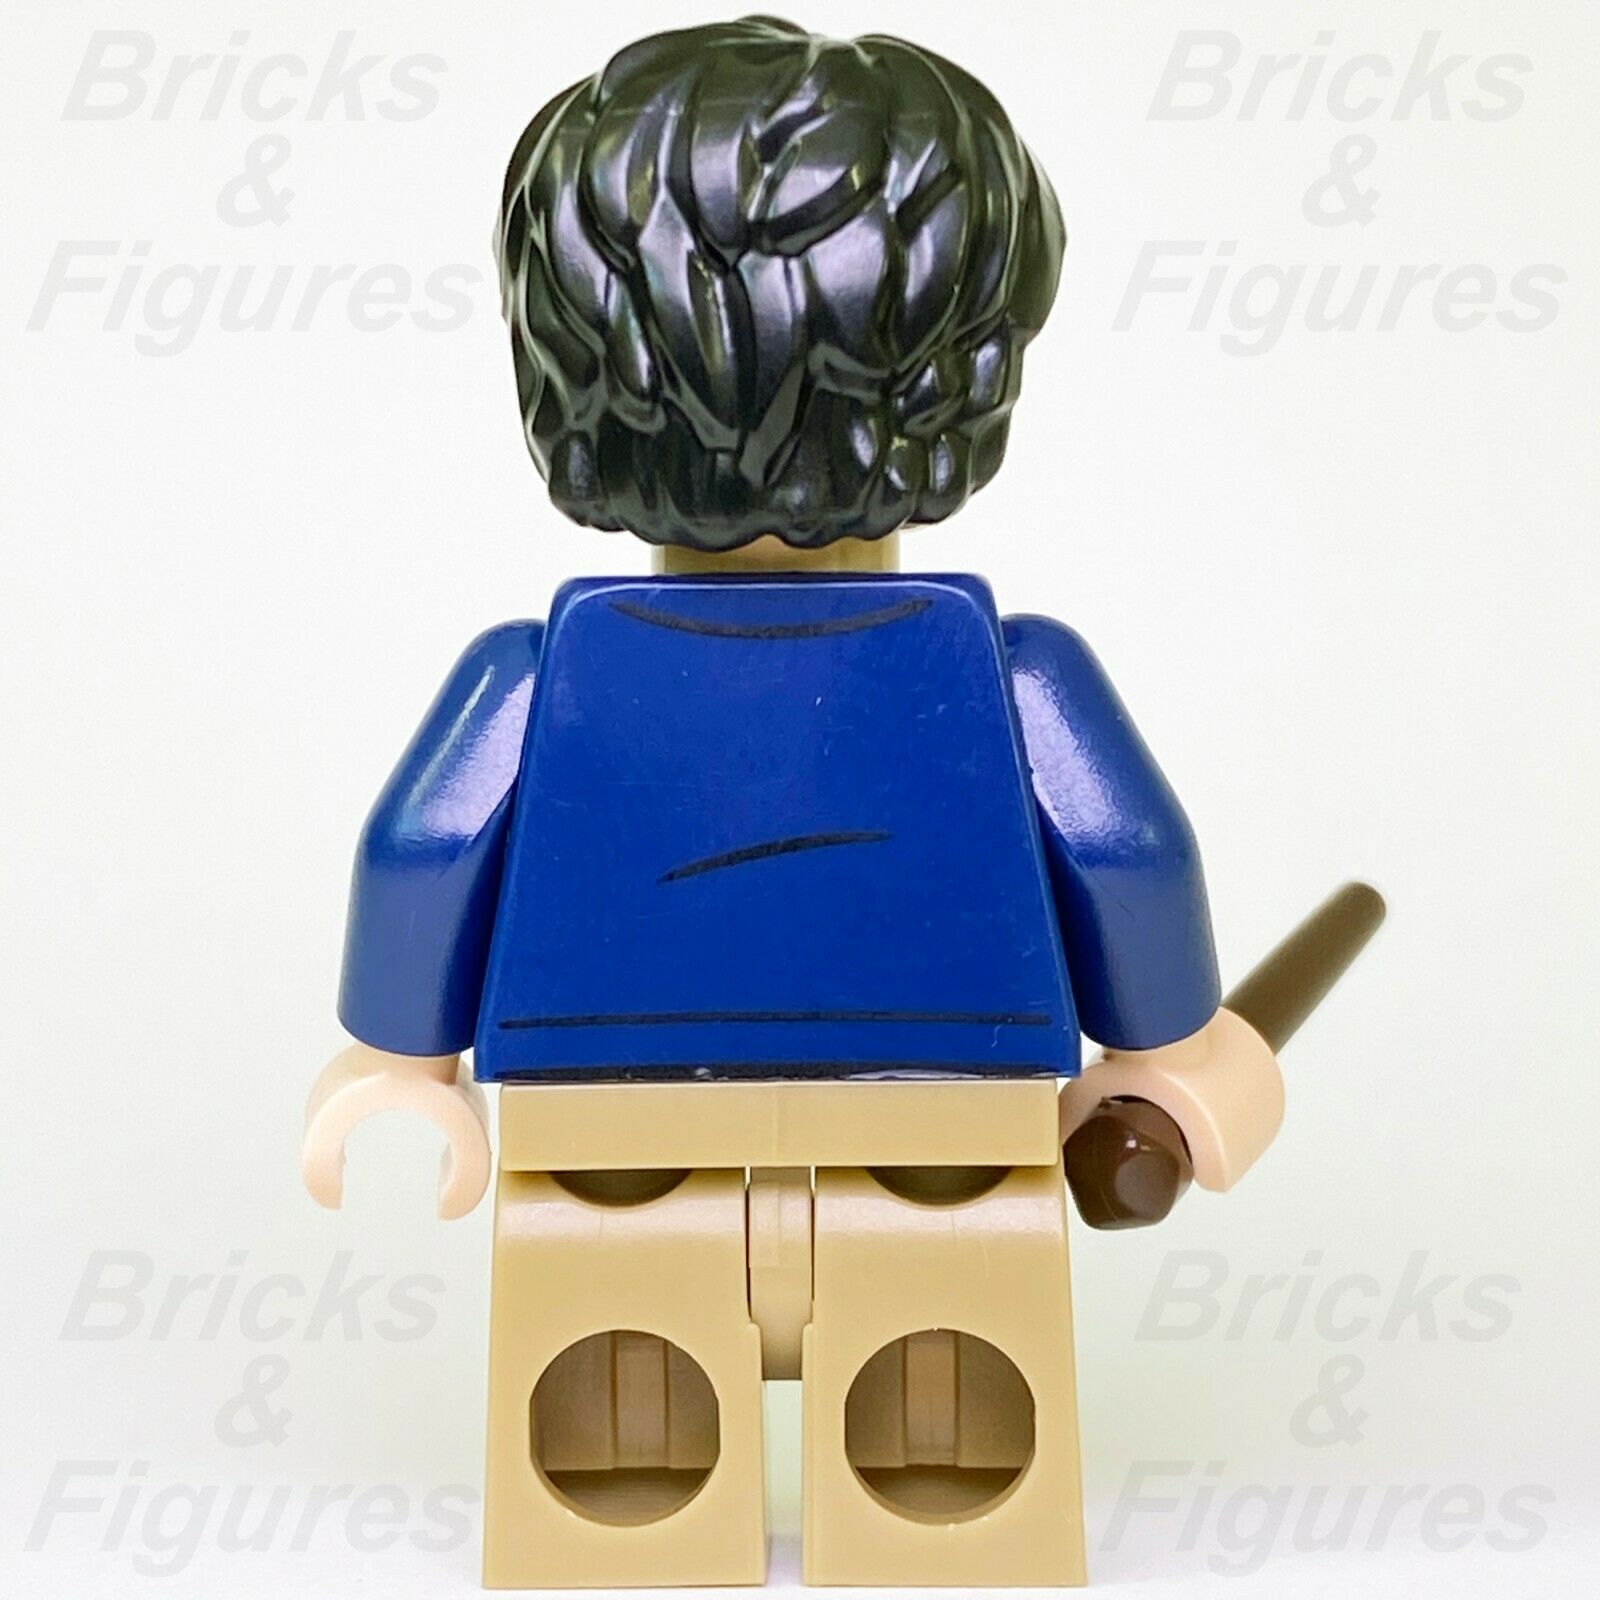 New LEGO Harry Potter Prisoner of Azkaban Wizard Minifig 75947 75945 75957 - Bricks & Figures